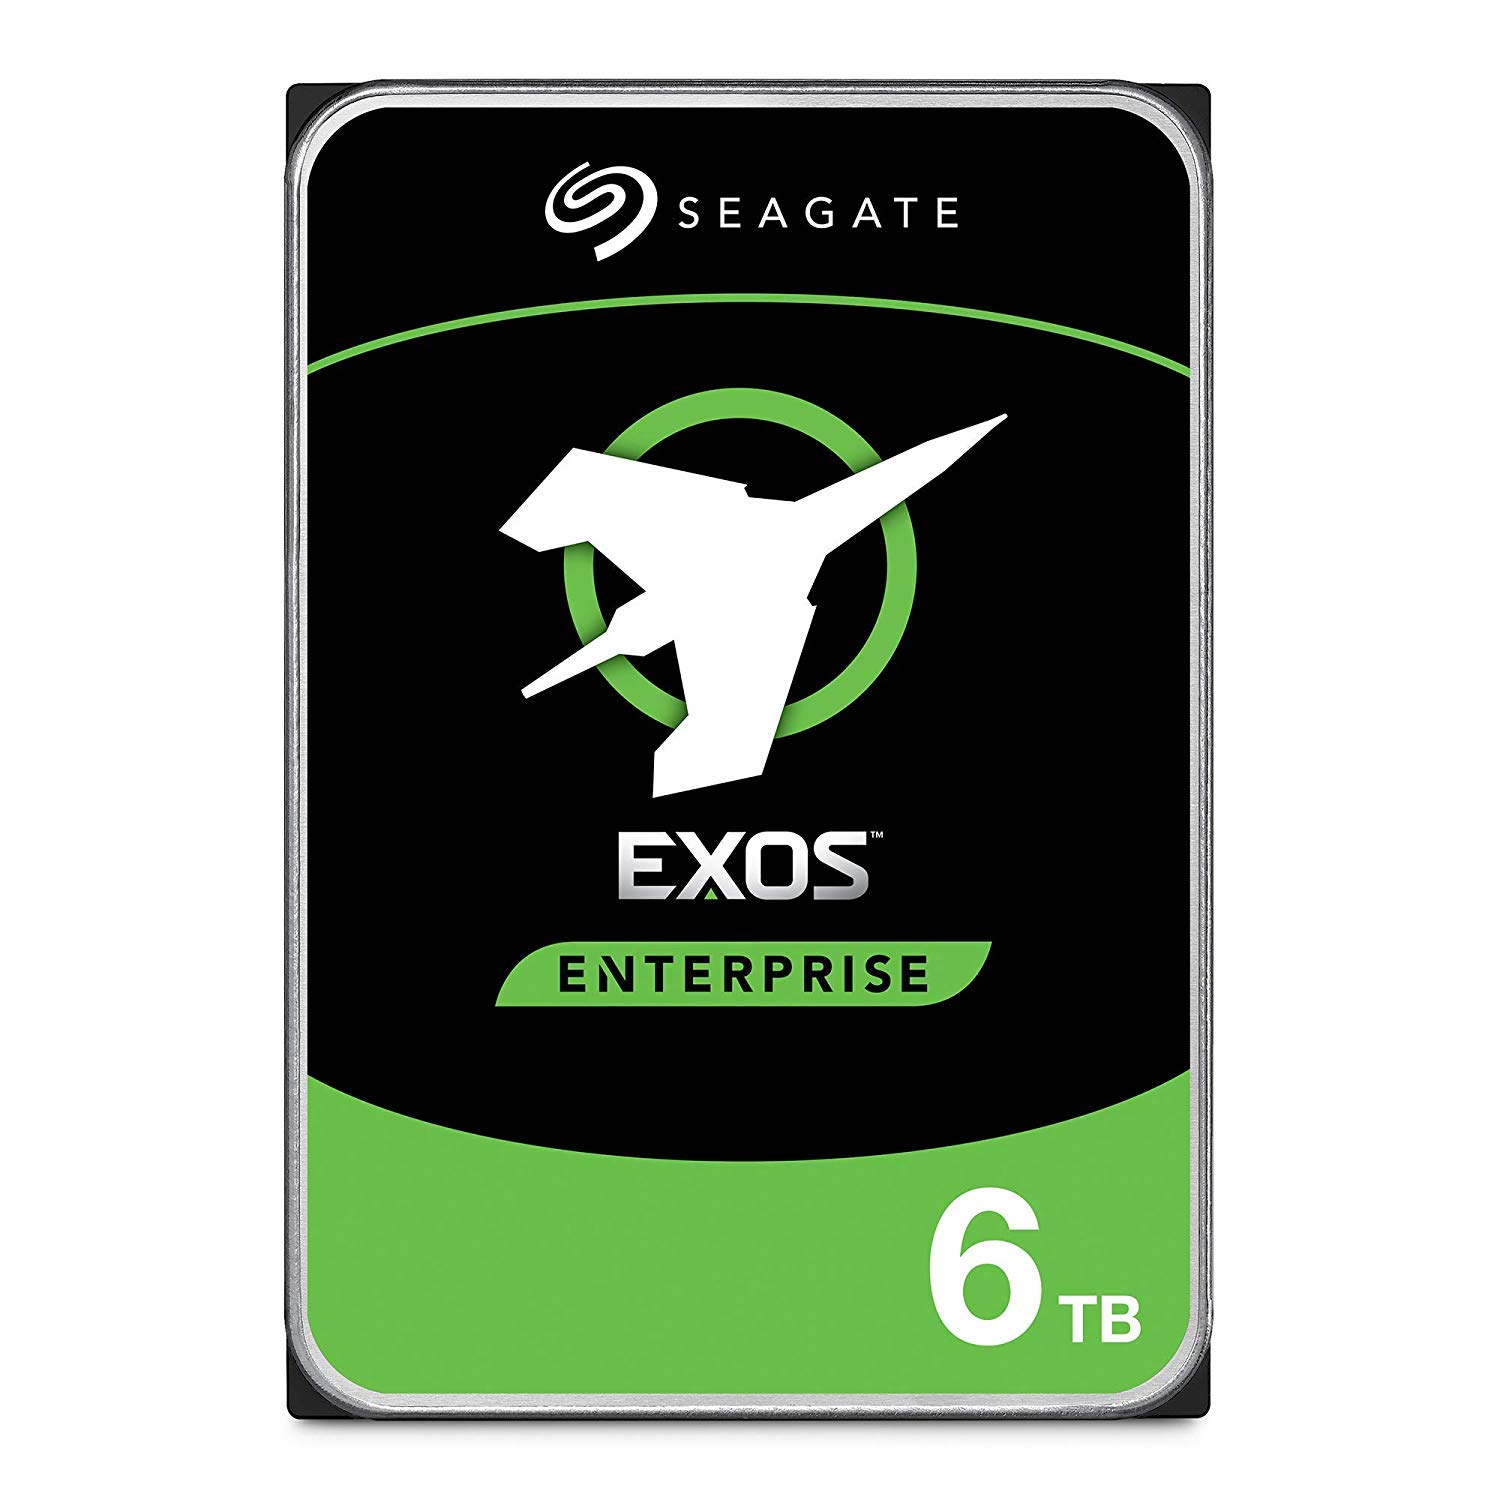 Seagate Exos 7E8 6TB 512e SATA 256MB Cache 3.5-Inch Enterprise Hard Drive - Frustration Free Packaging (ST6000NM0115) (Renewed)